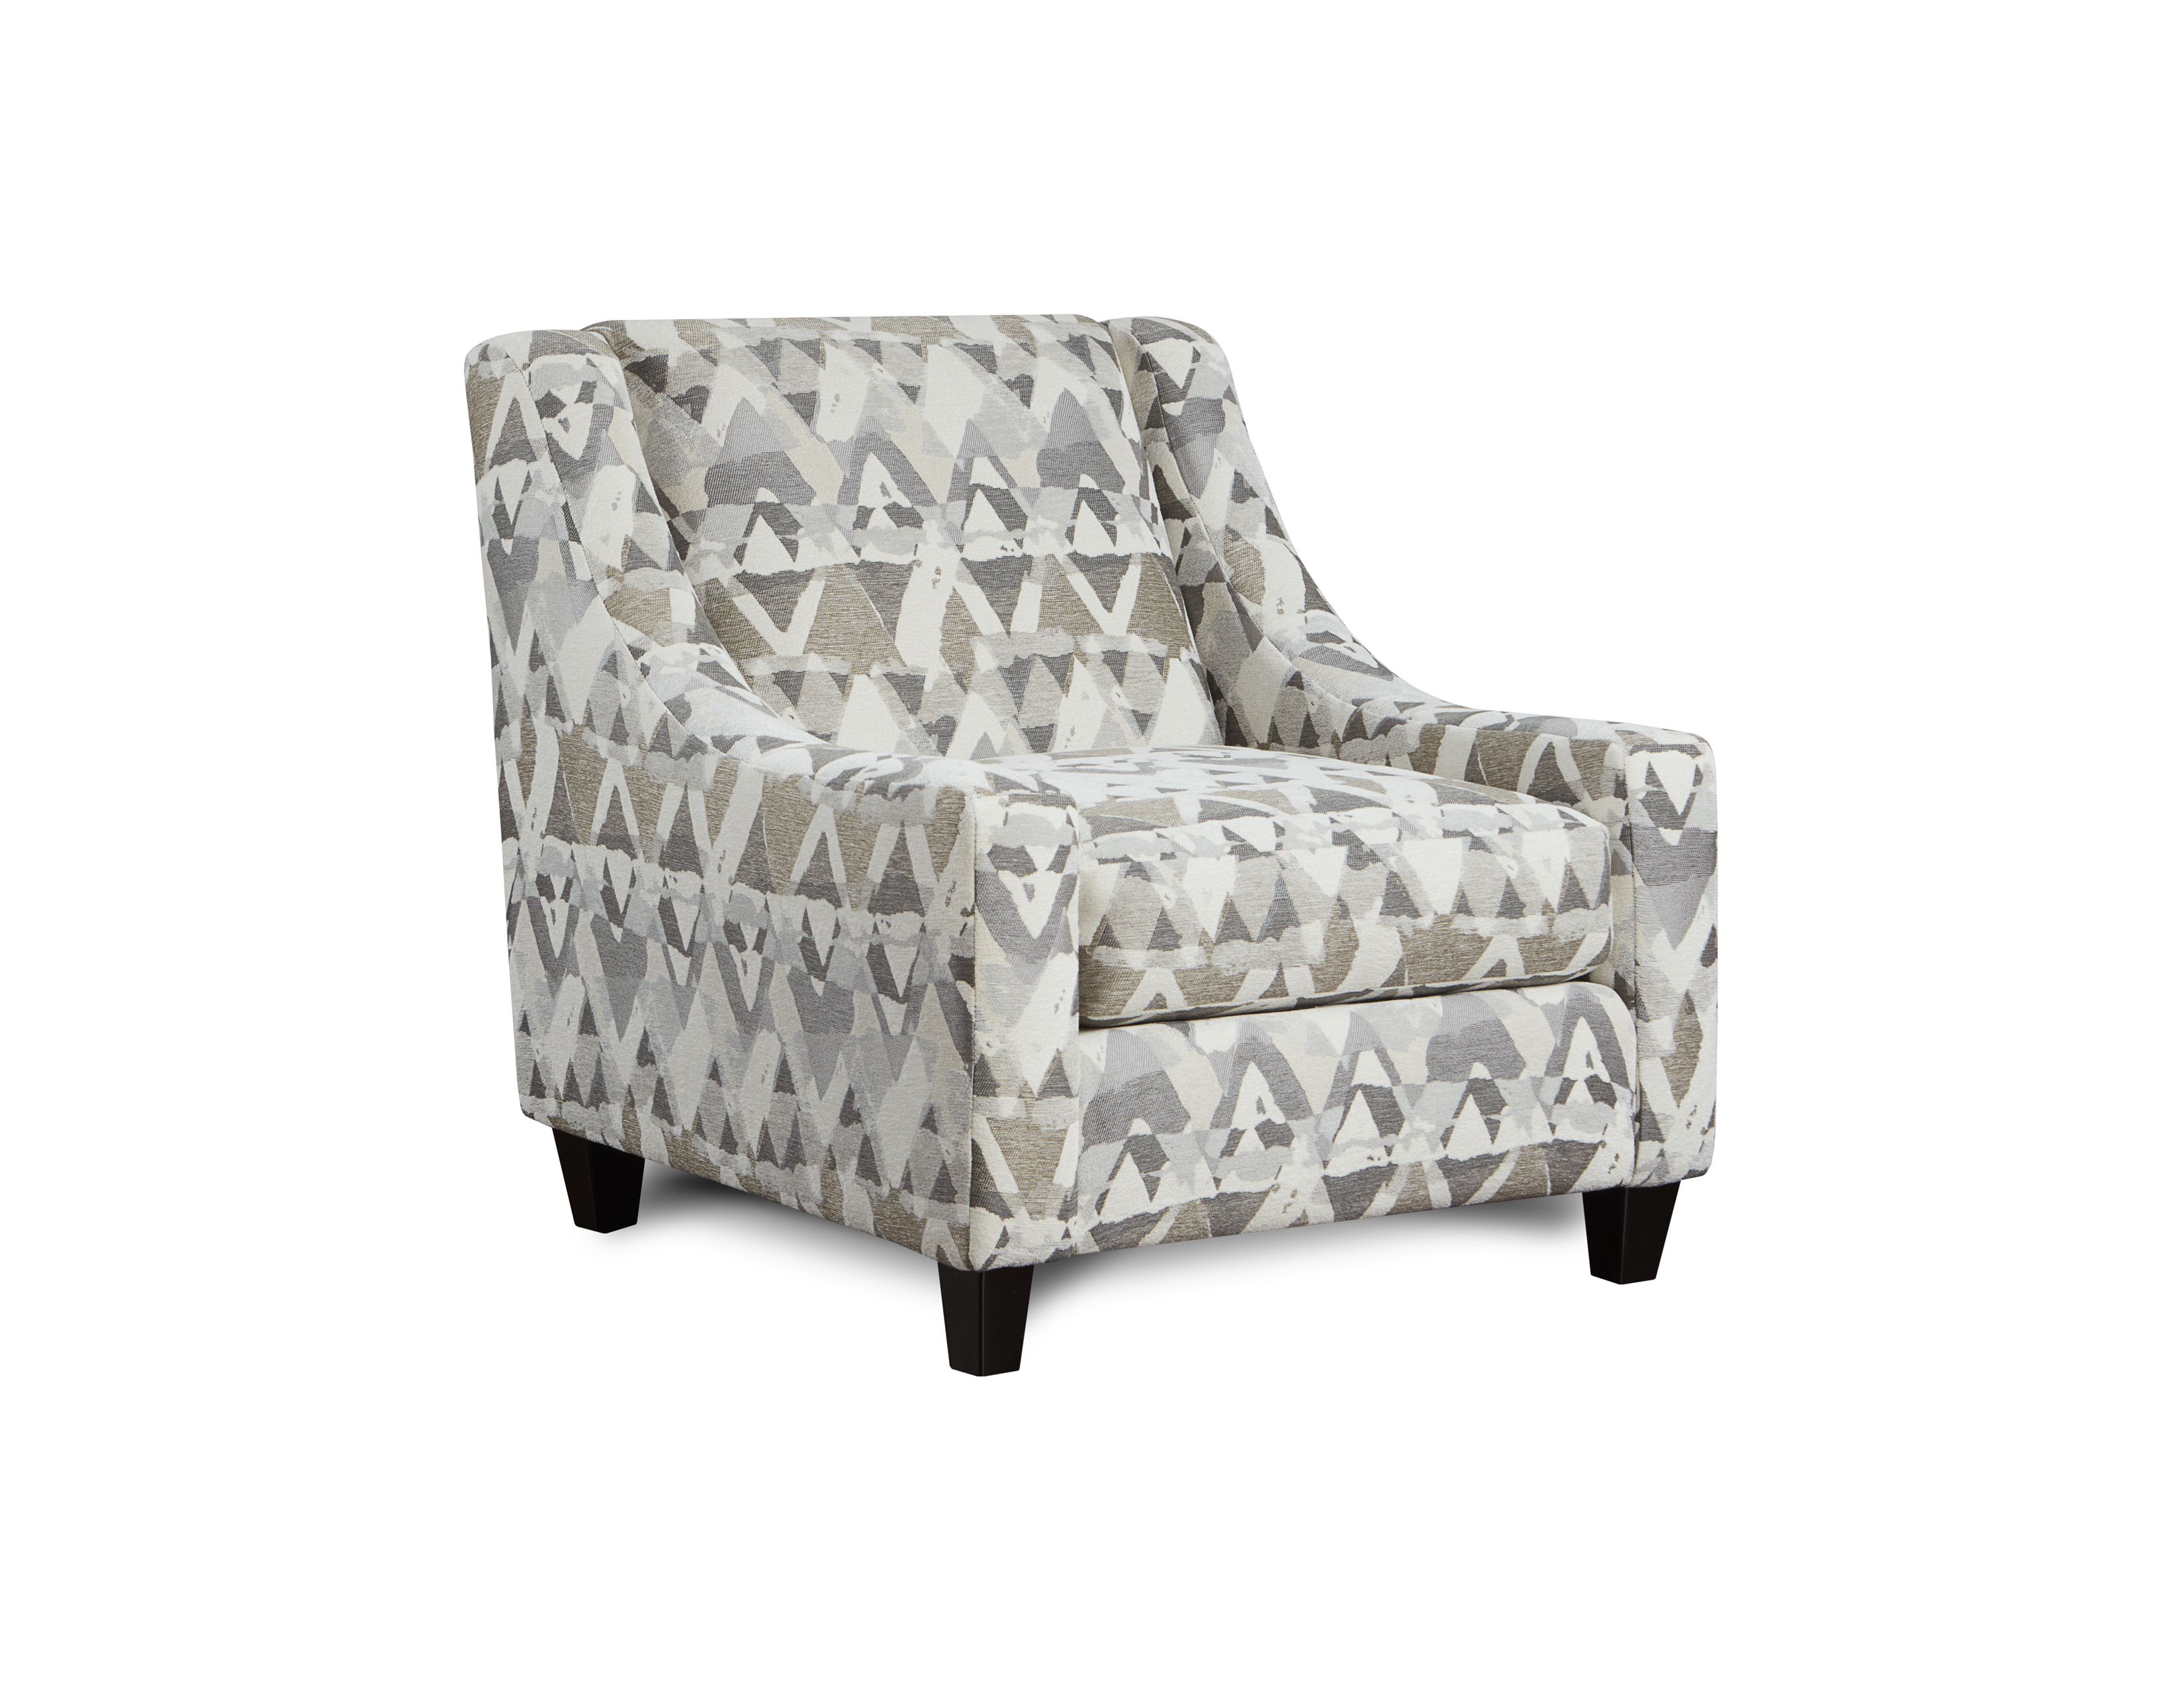 Mountain View Cement Fusion Furniture chair, Alton Silver collection